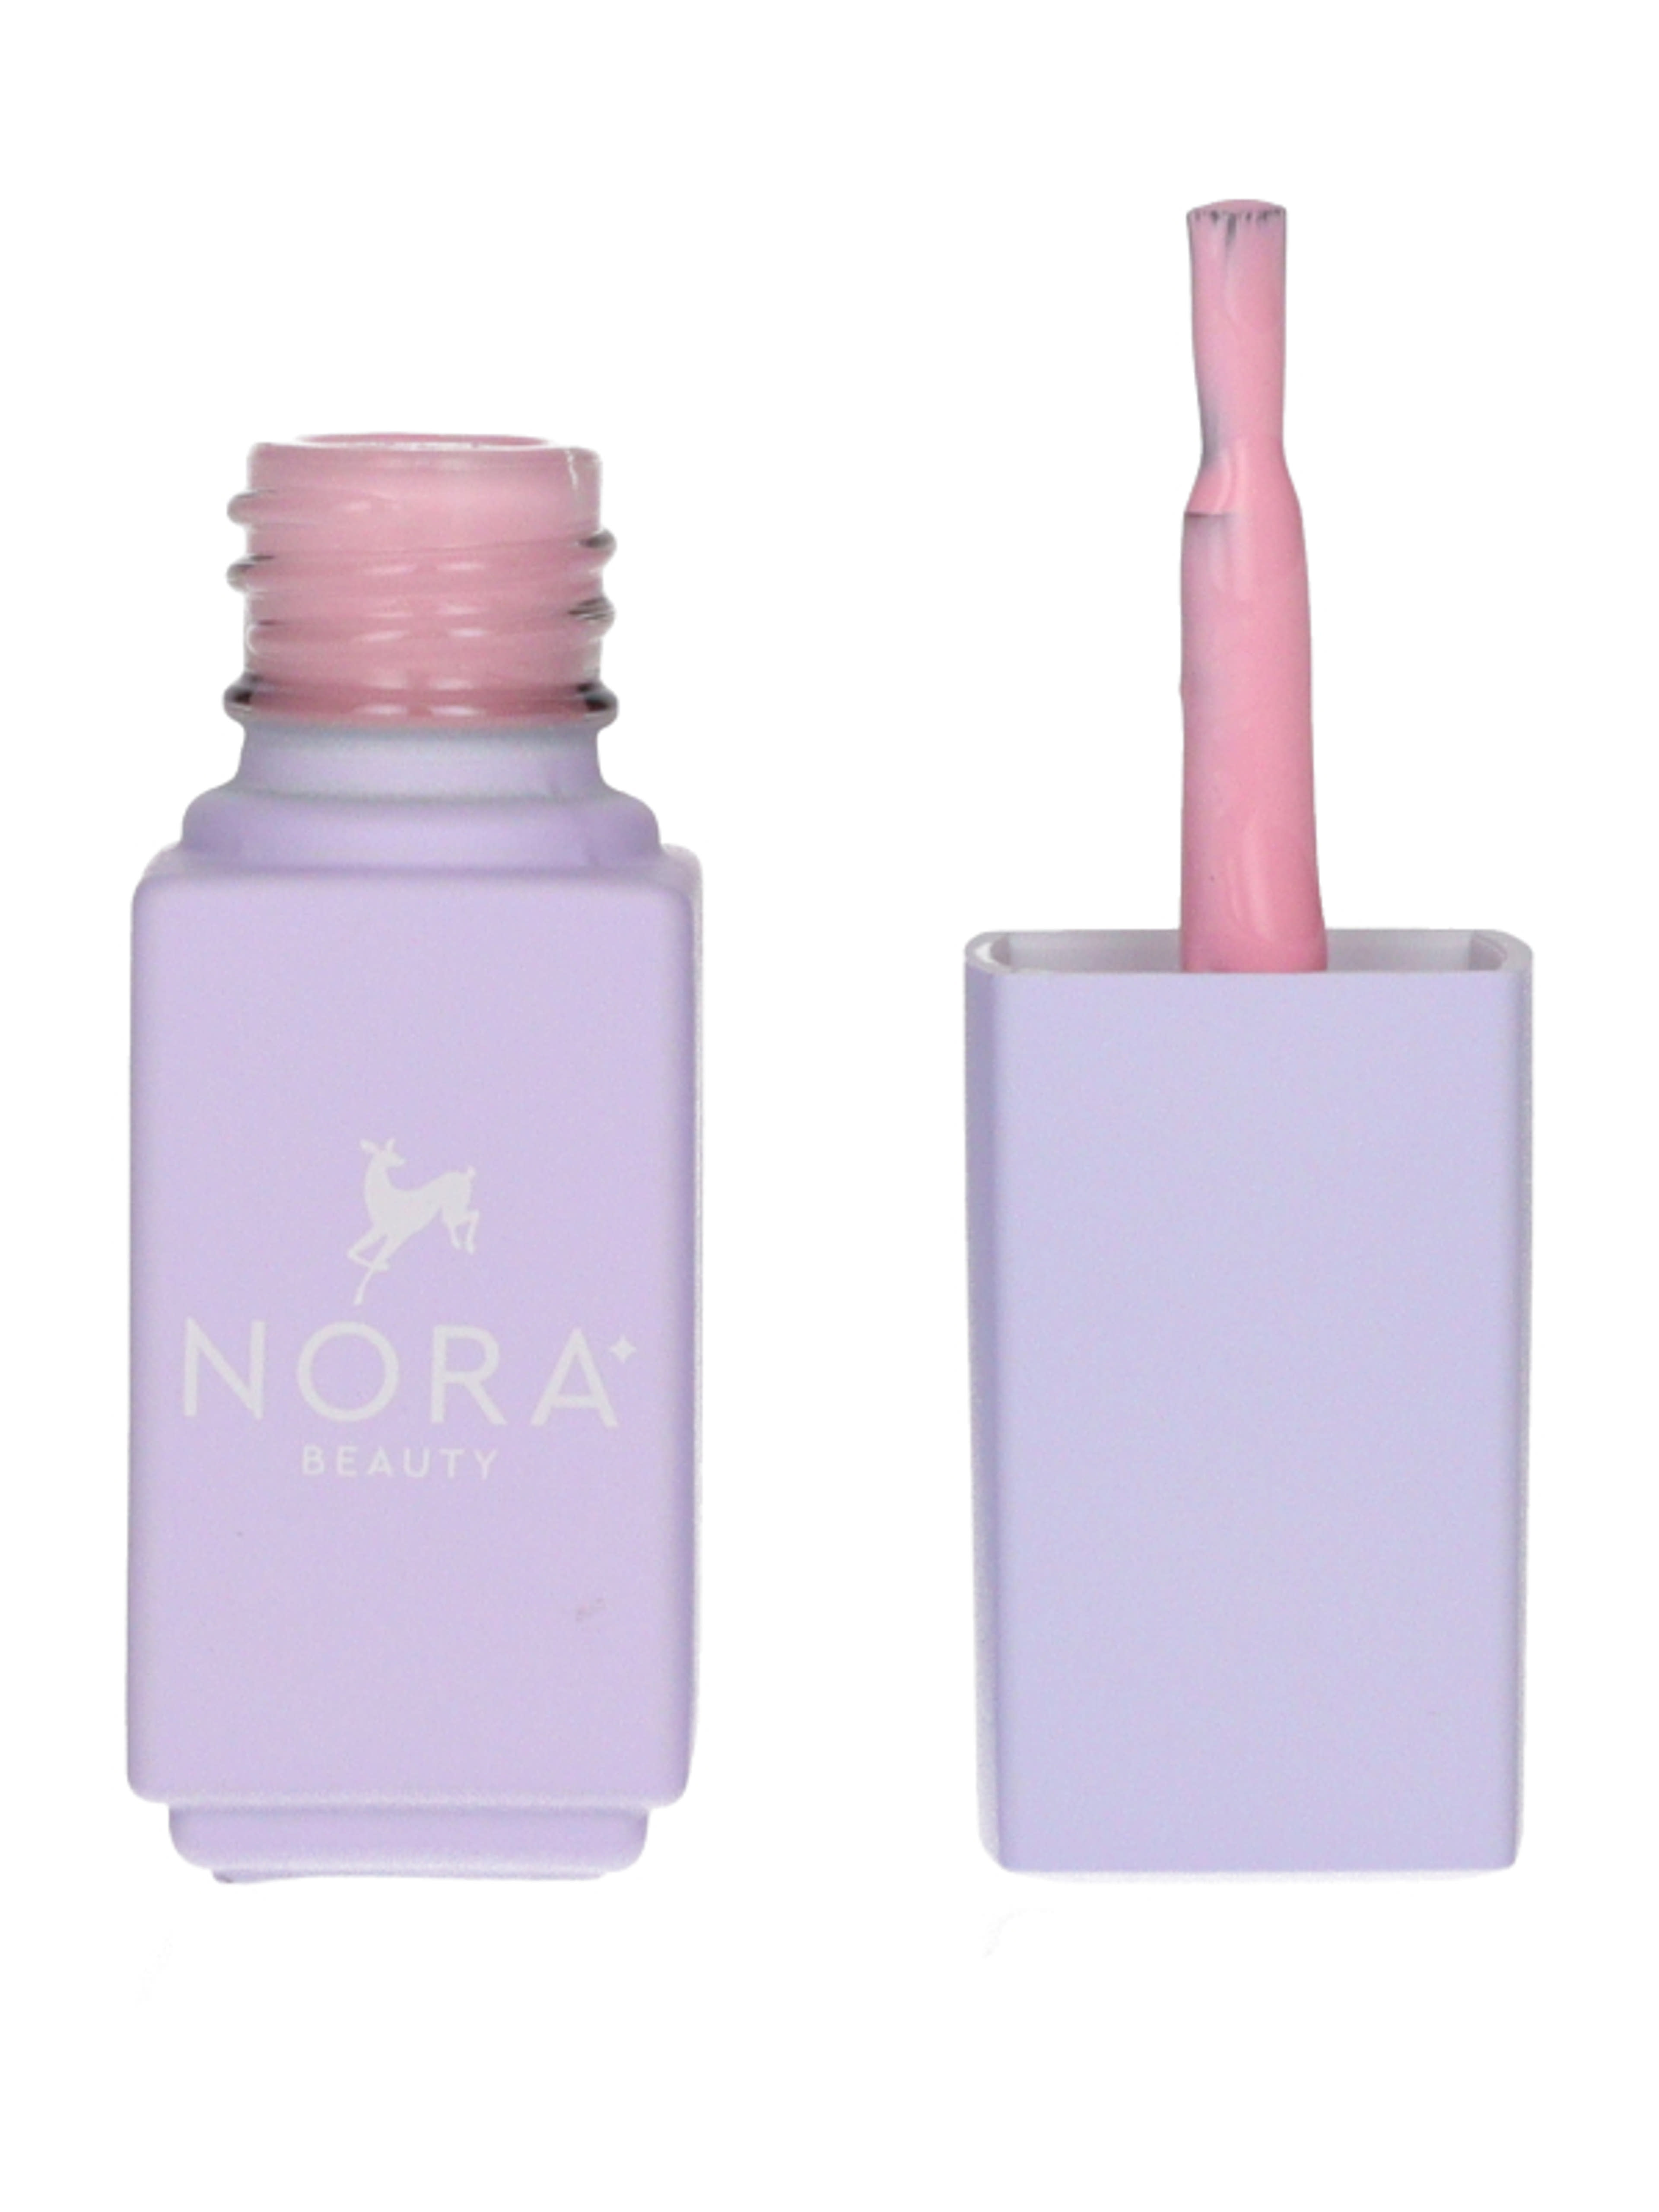 Nora Beauty UV lakkzselé /se-01 sweet candy - 1 db-4